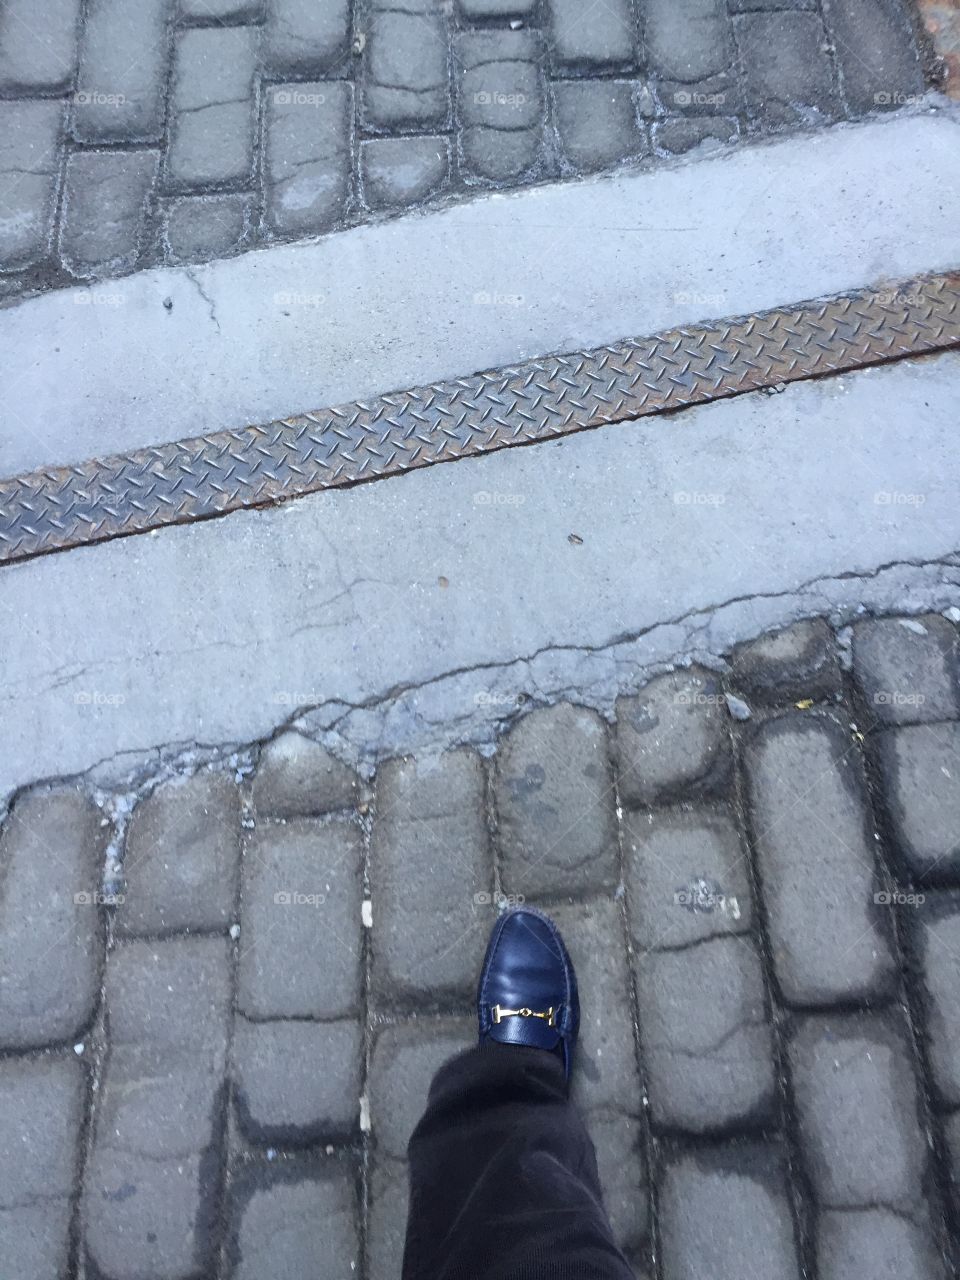 Walking NYC streets